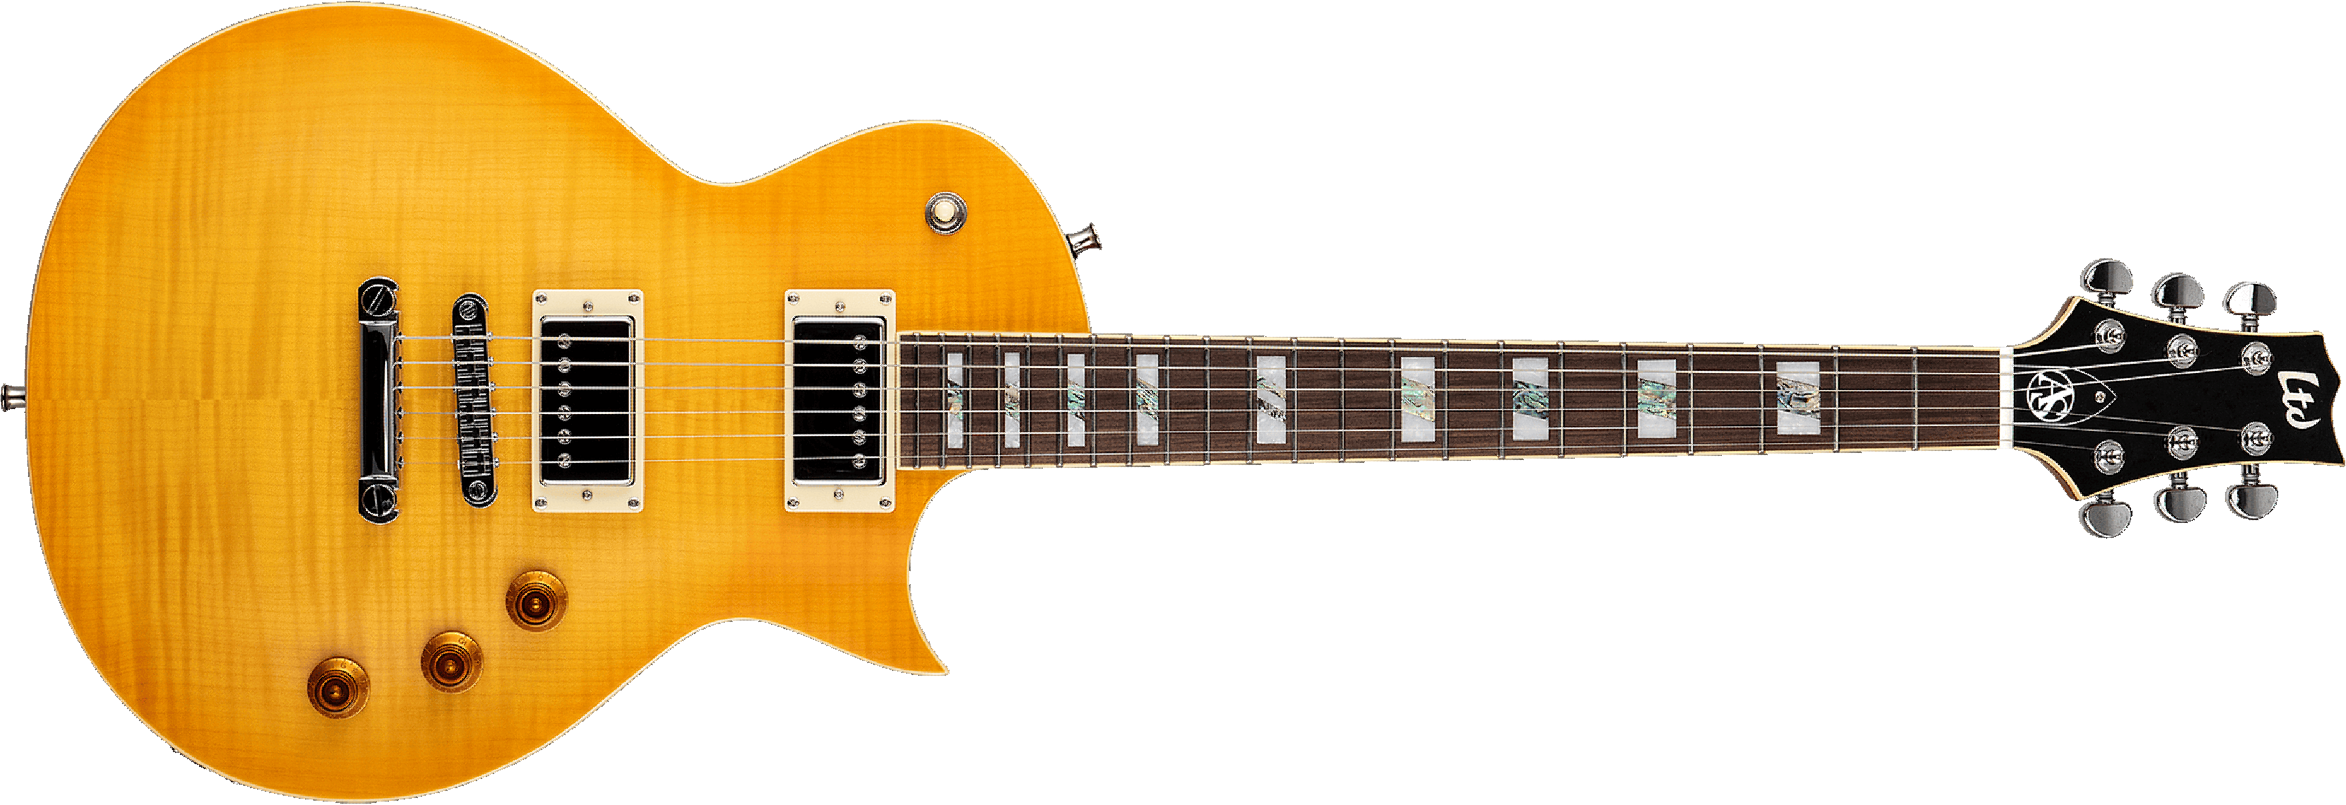 Ltd As1fm Alex Skolnick Signature Ht Hh Pf - Lemon Burst - Enkel gesneden elektrische gitaar - Main picture